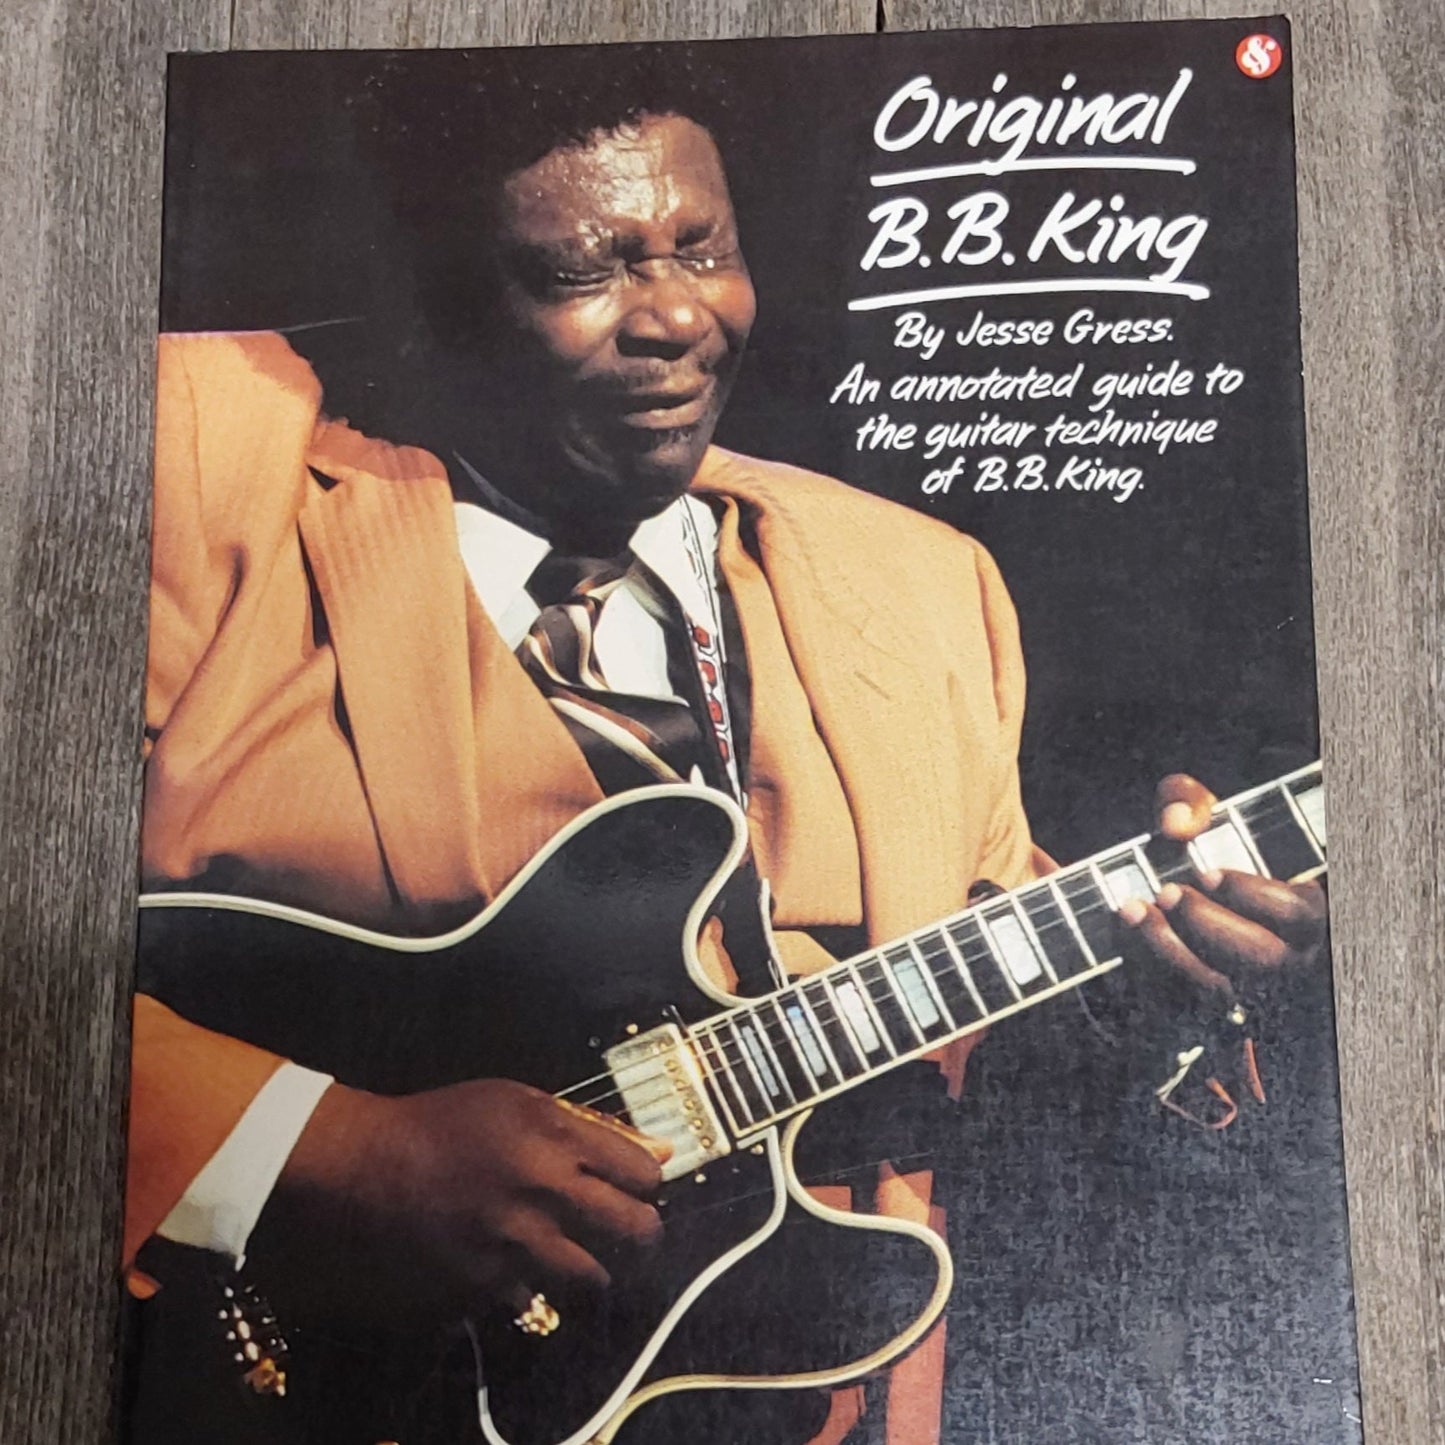 Used Original B.B.King Lesson Book 1989 AMSCO by Jesse Gress